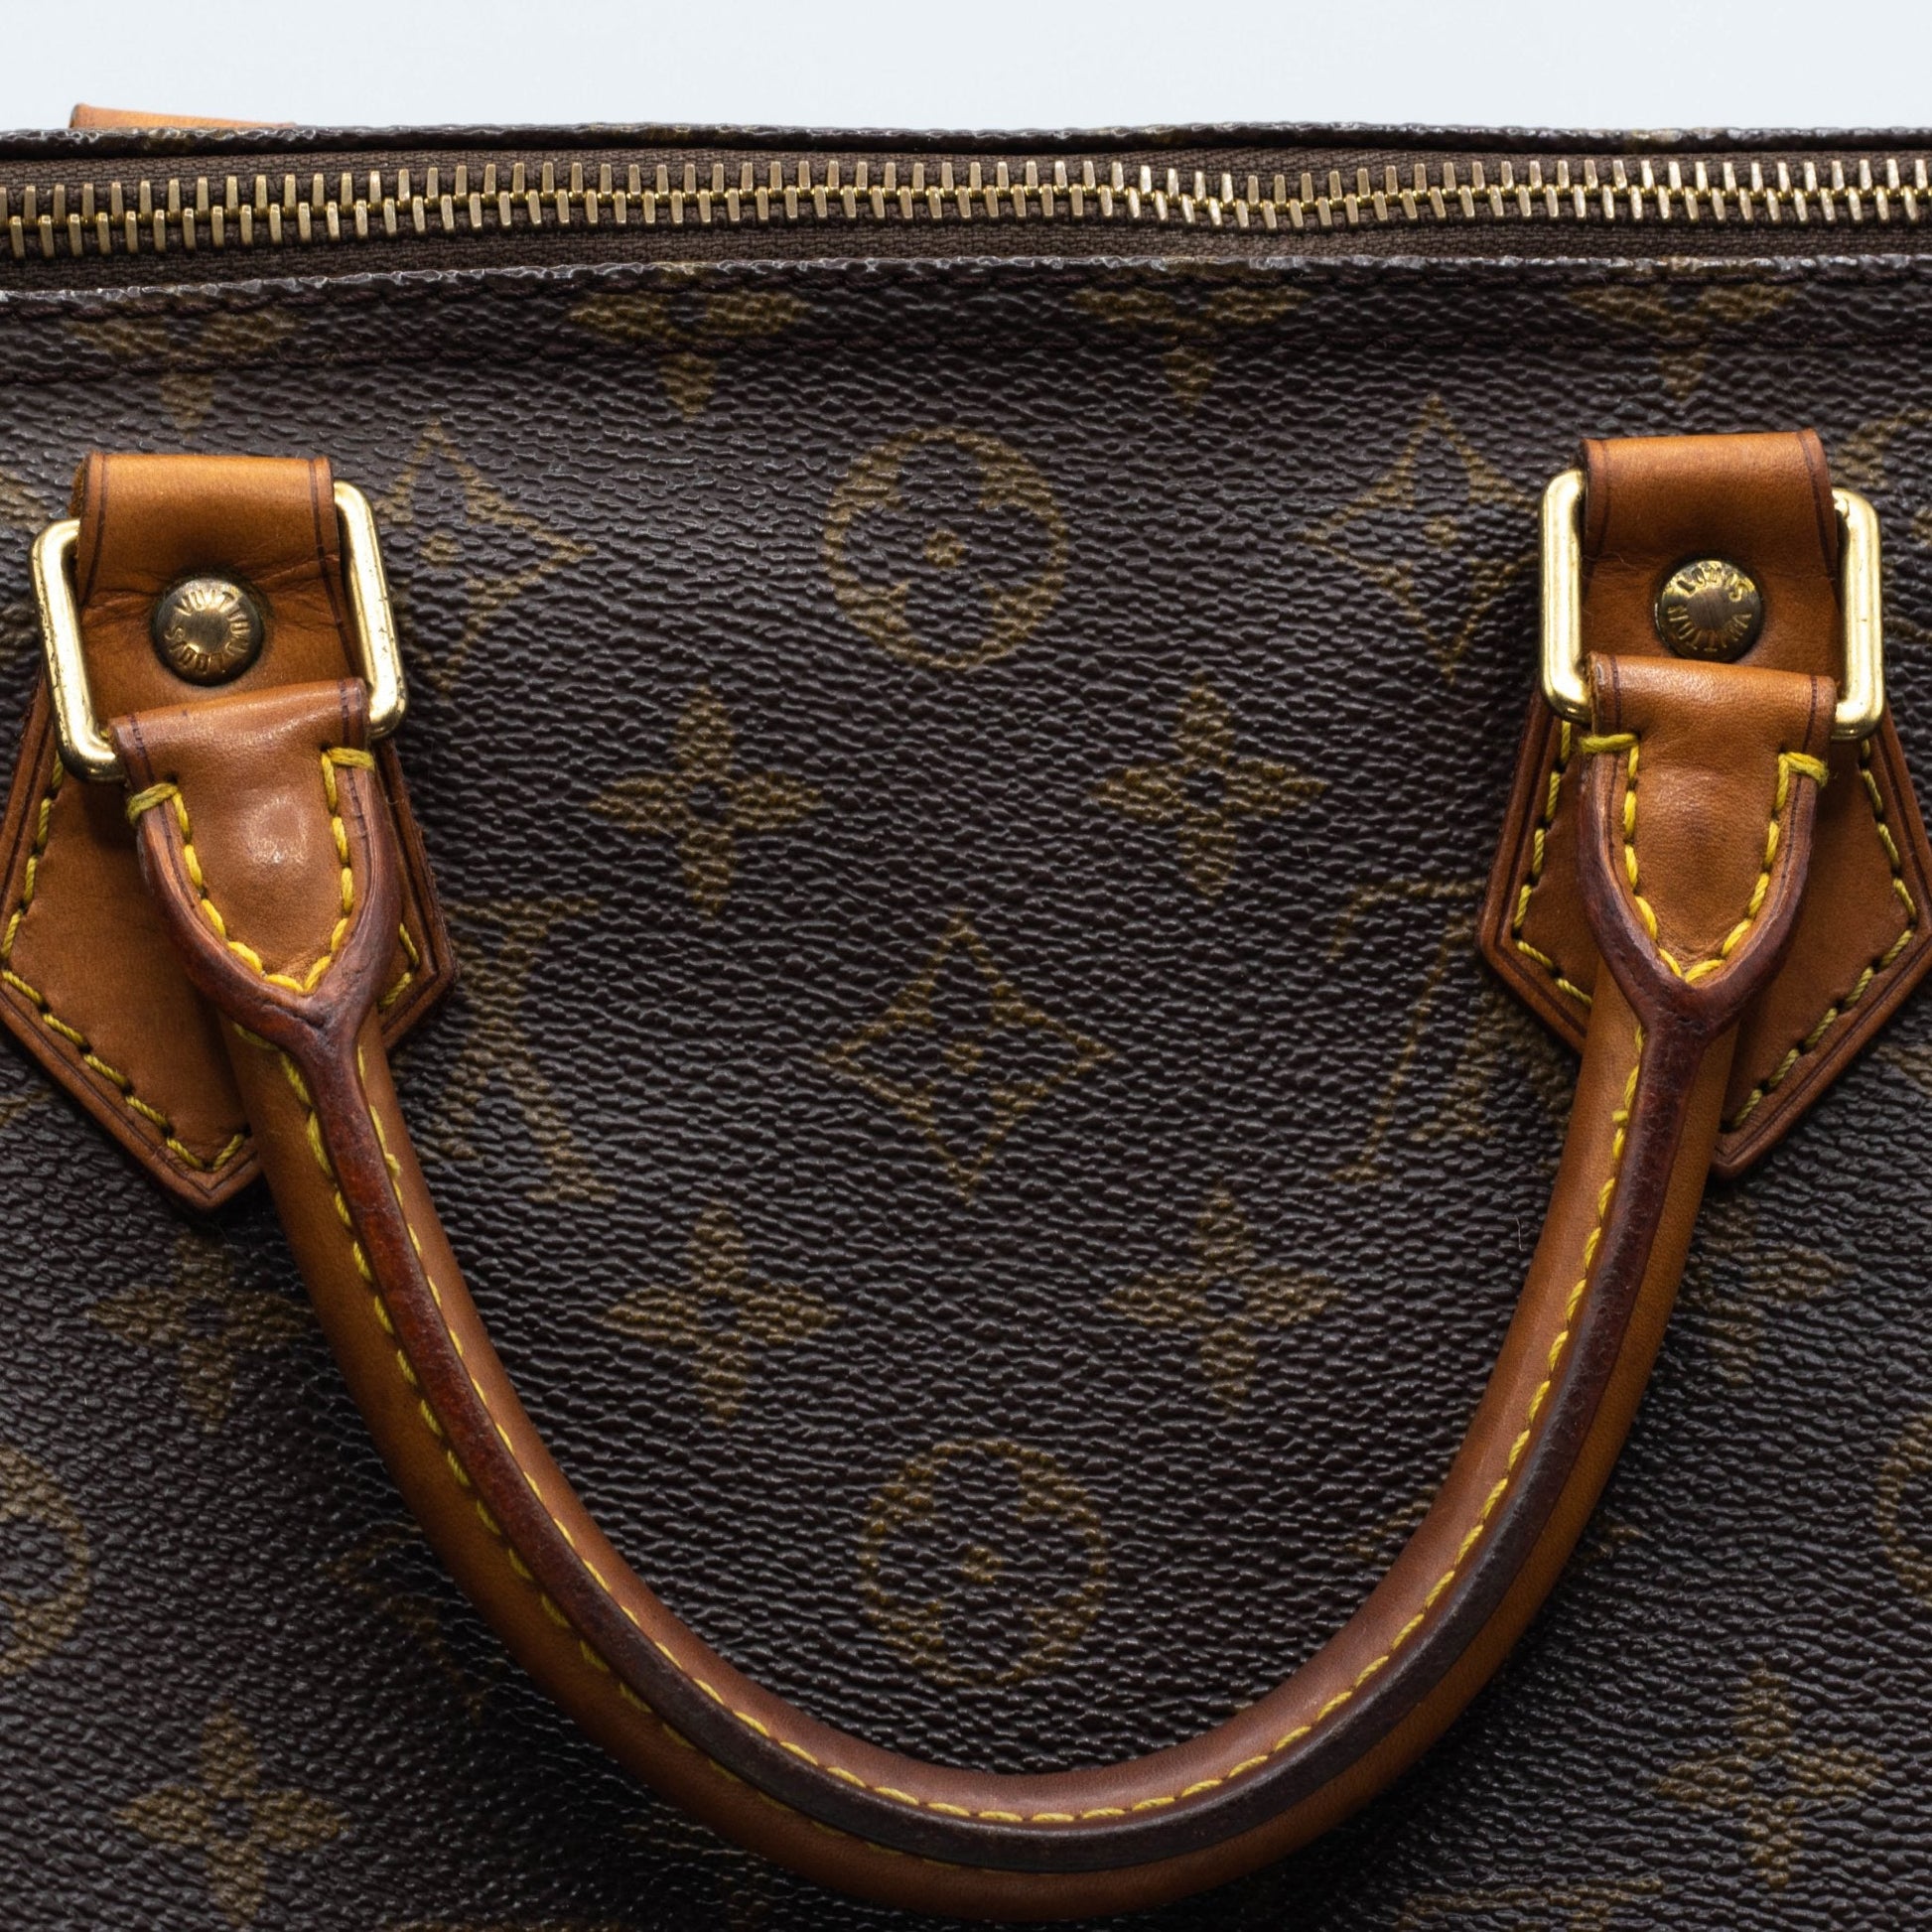 Louis Vuitton Speedy 30 M41526 Monogram Handbag 11458